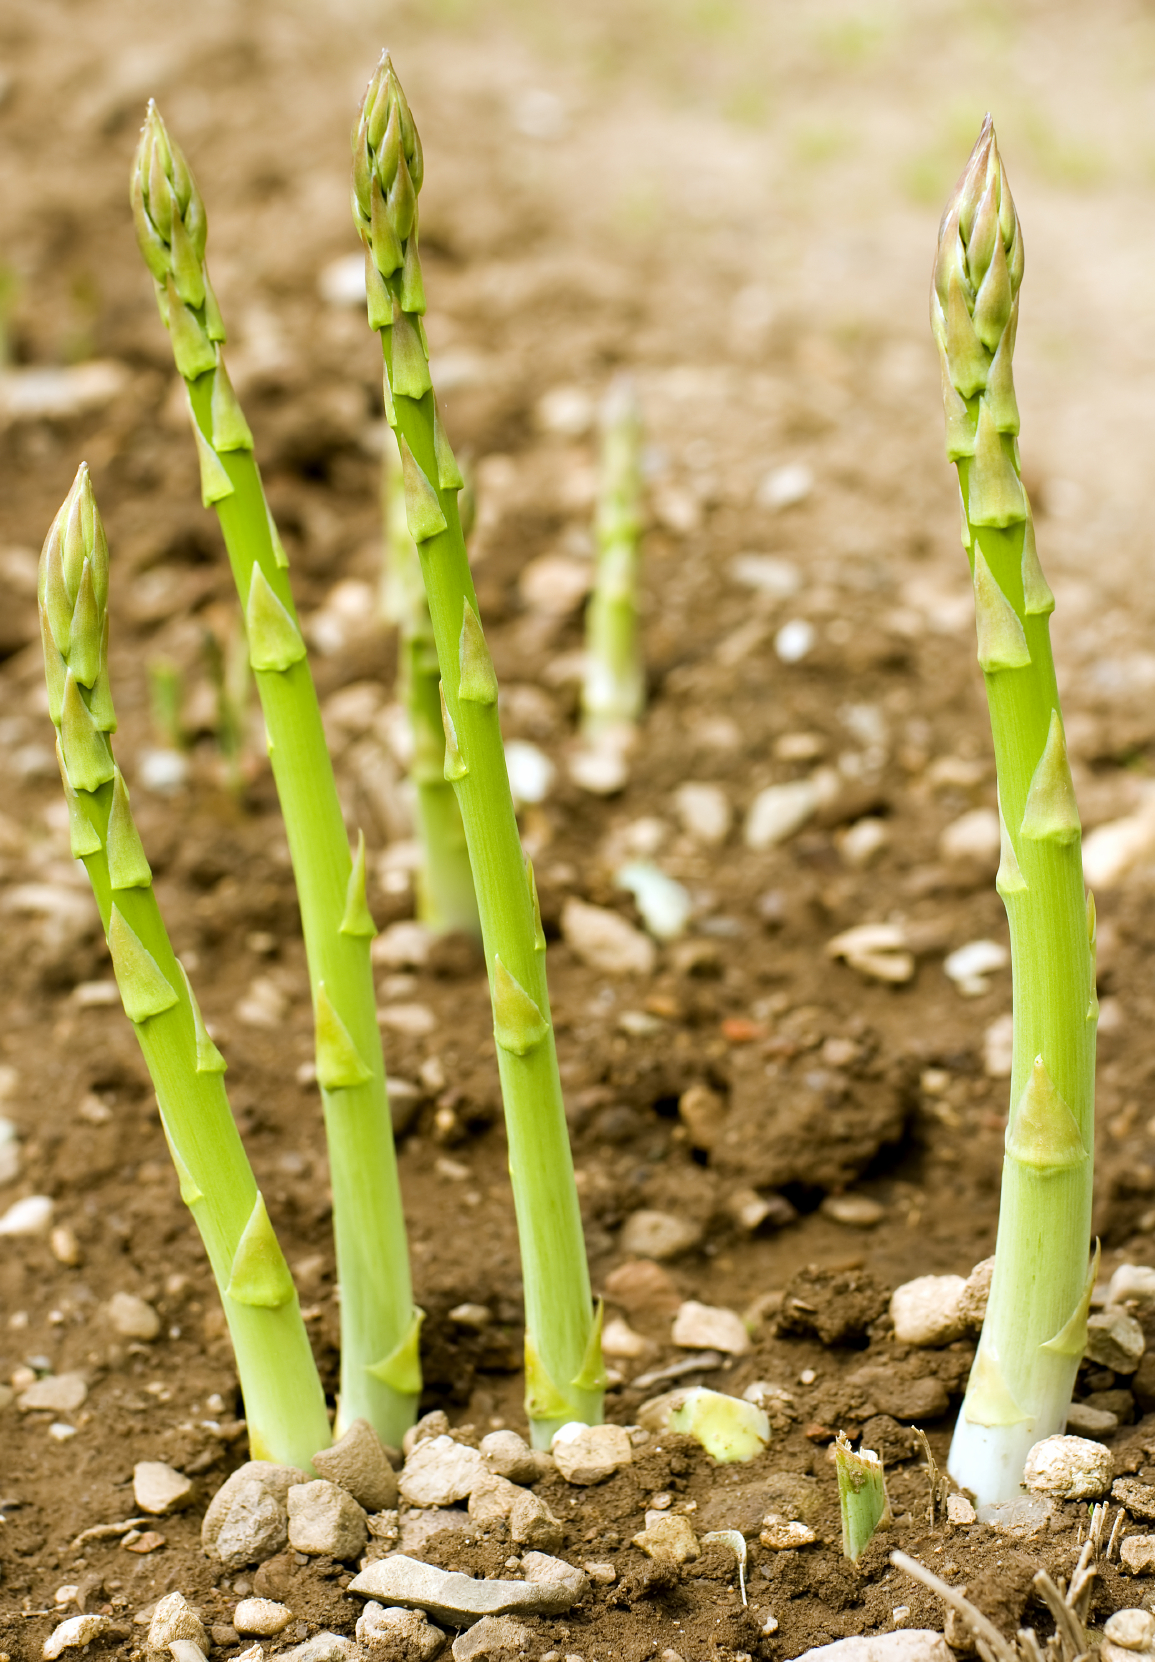 Asparagus spears grow out of the soil